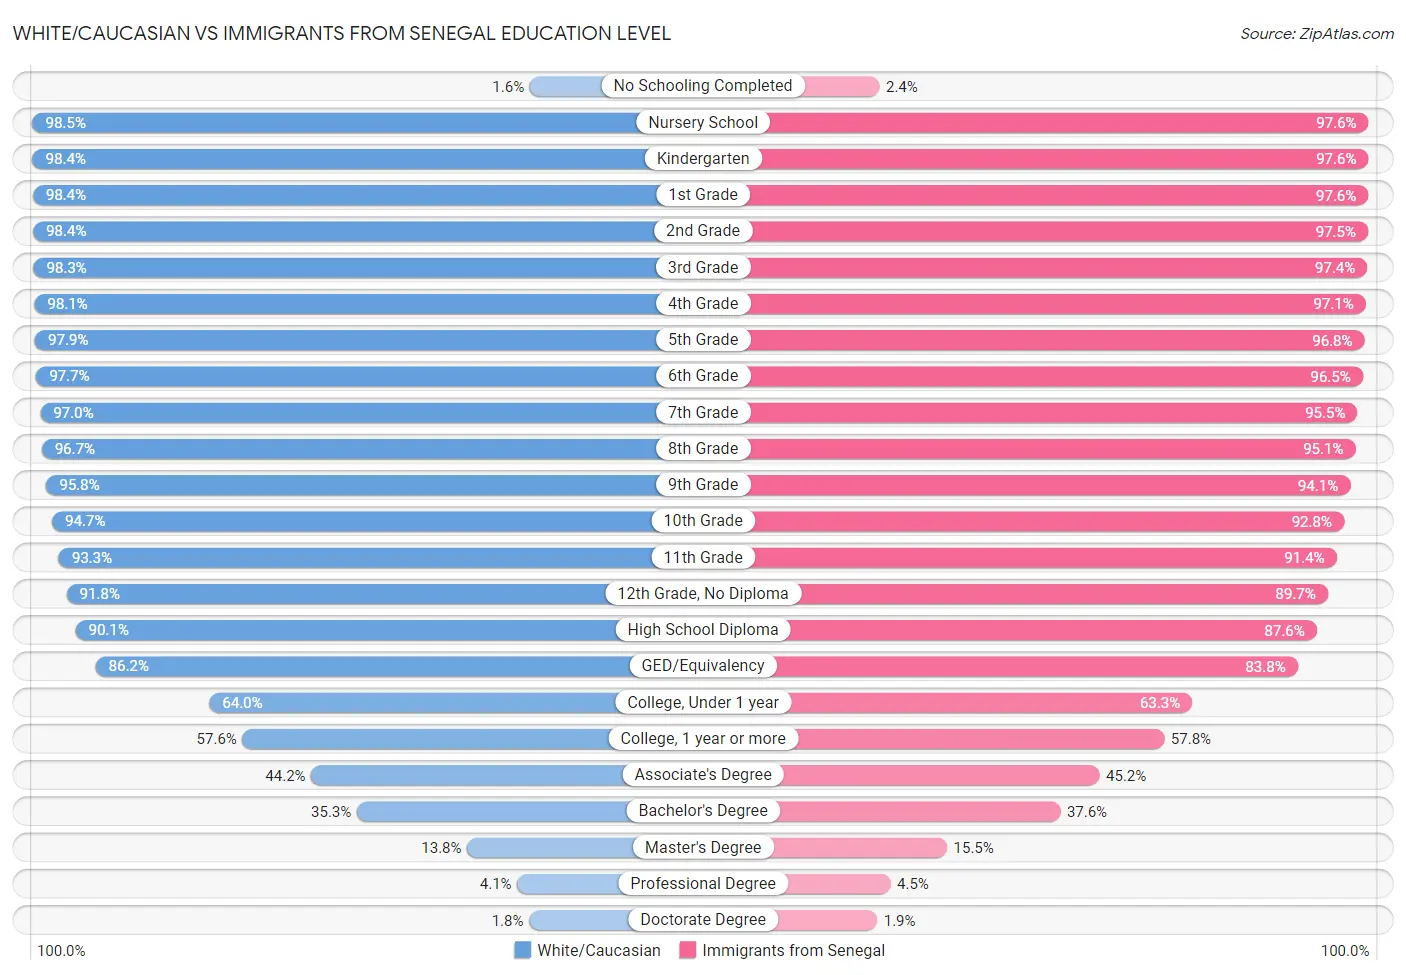 White/Caucasian vs Immigrants from Senegal Education Level